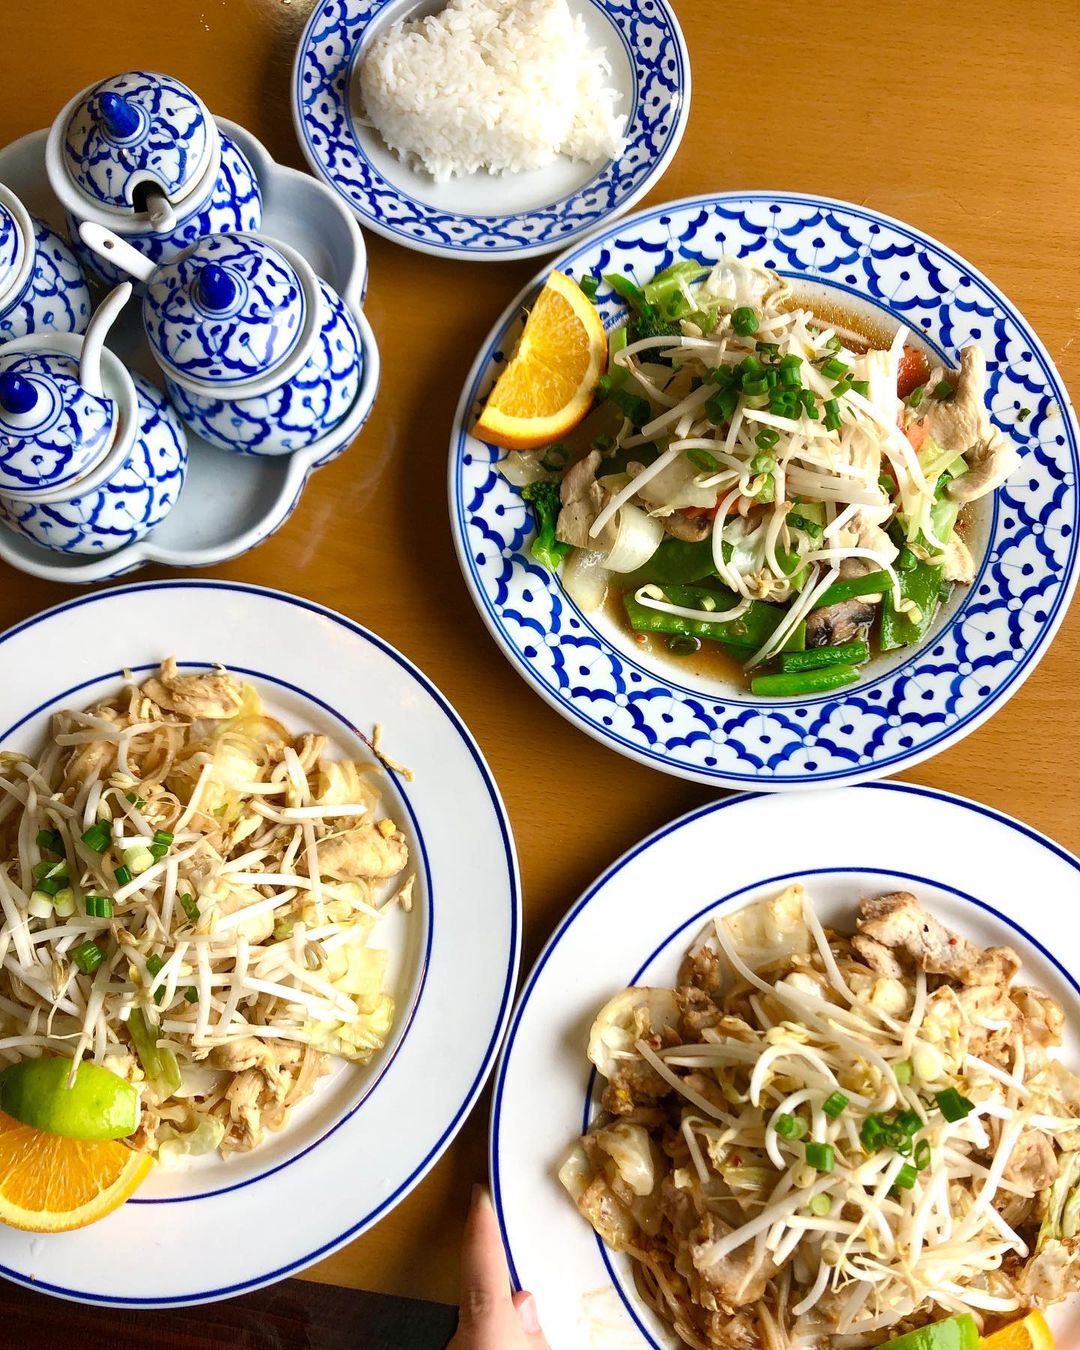 Destin Restaurants - Thai Delights - Original Photo